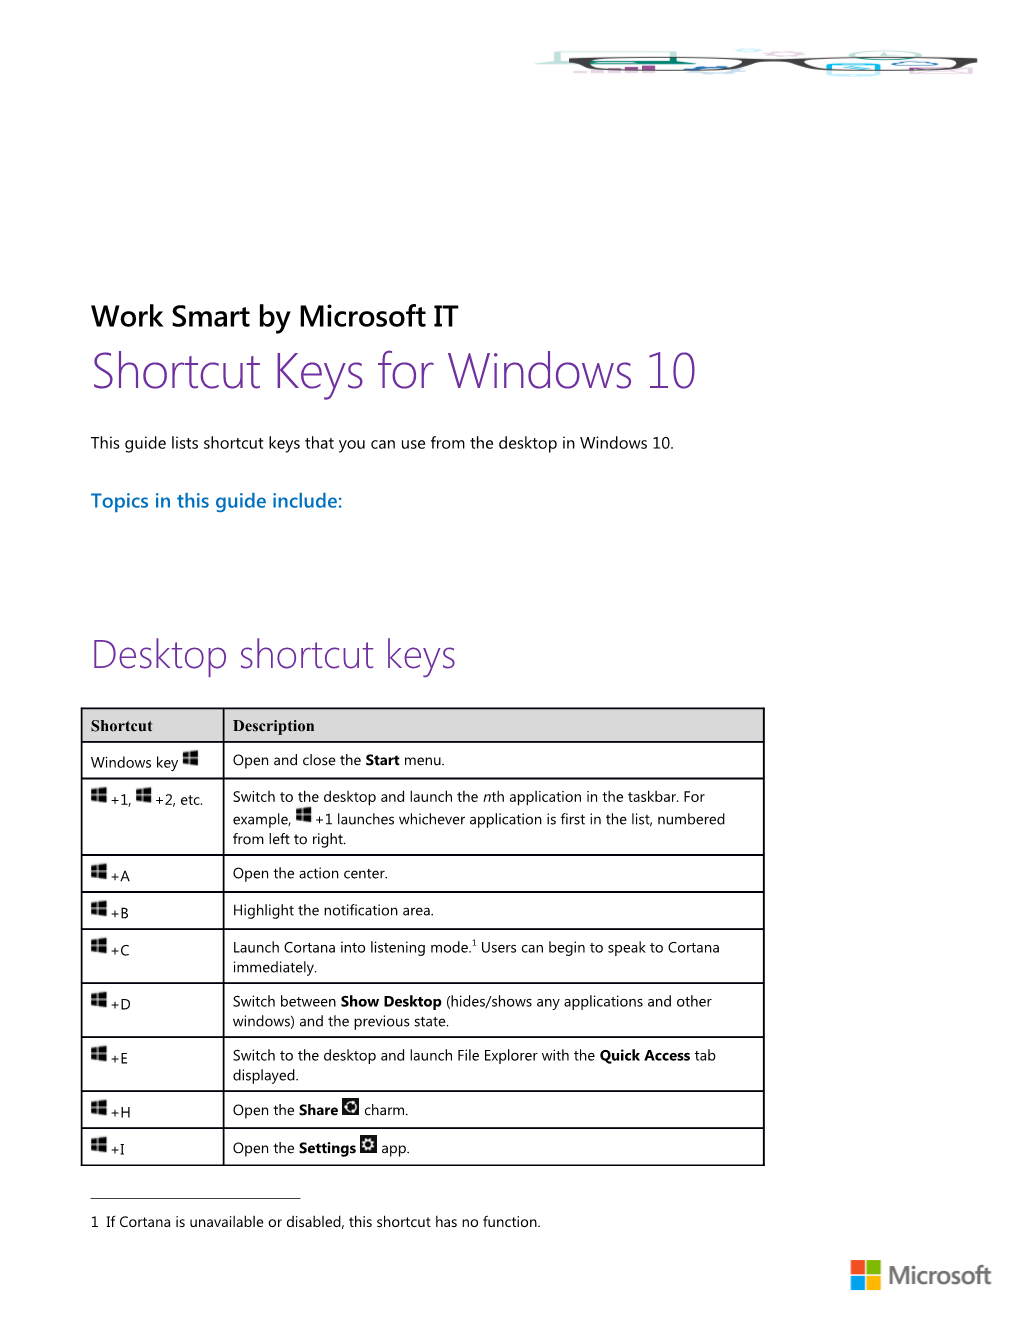 Shortcut Keys for Windows 10